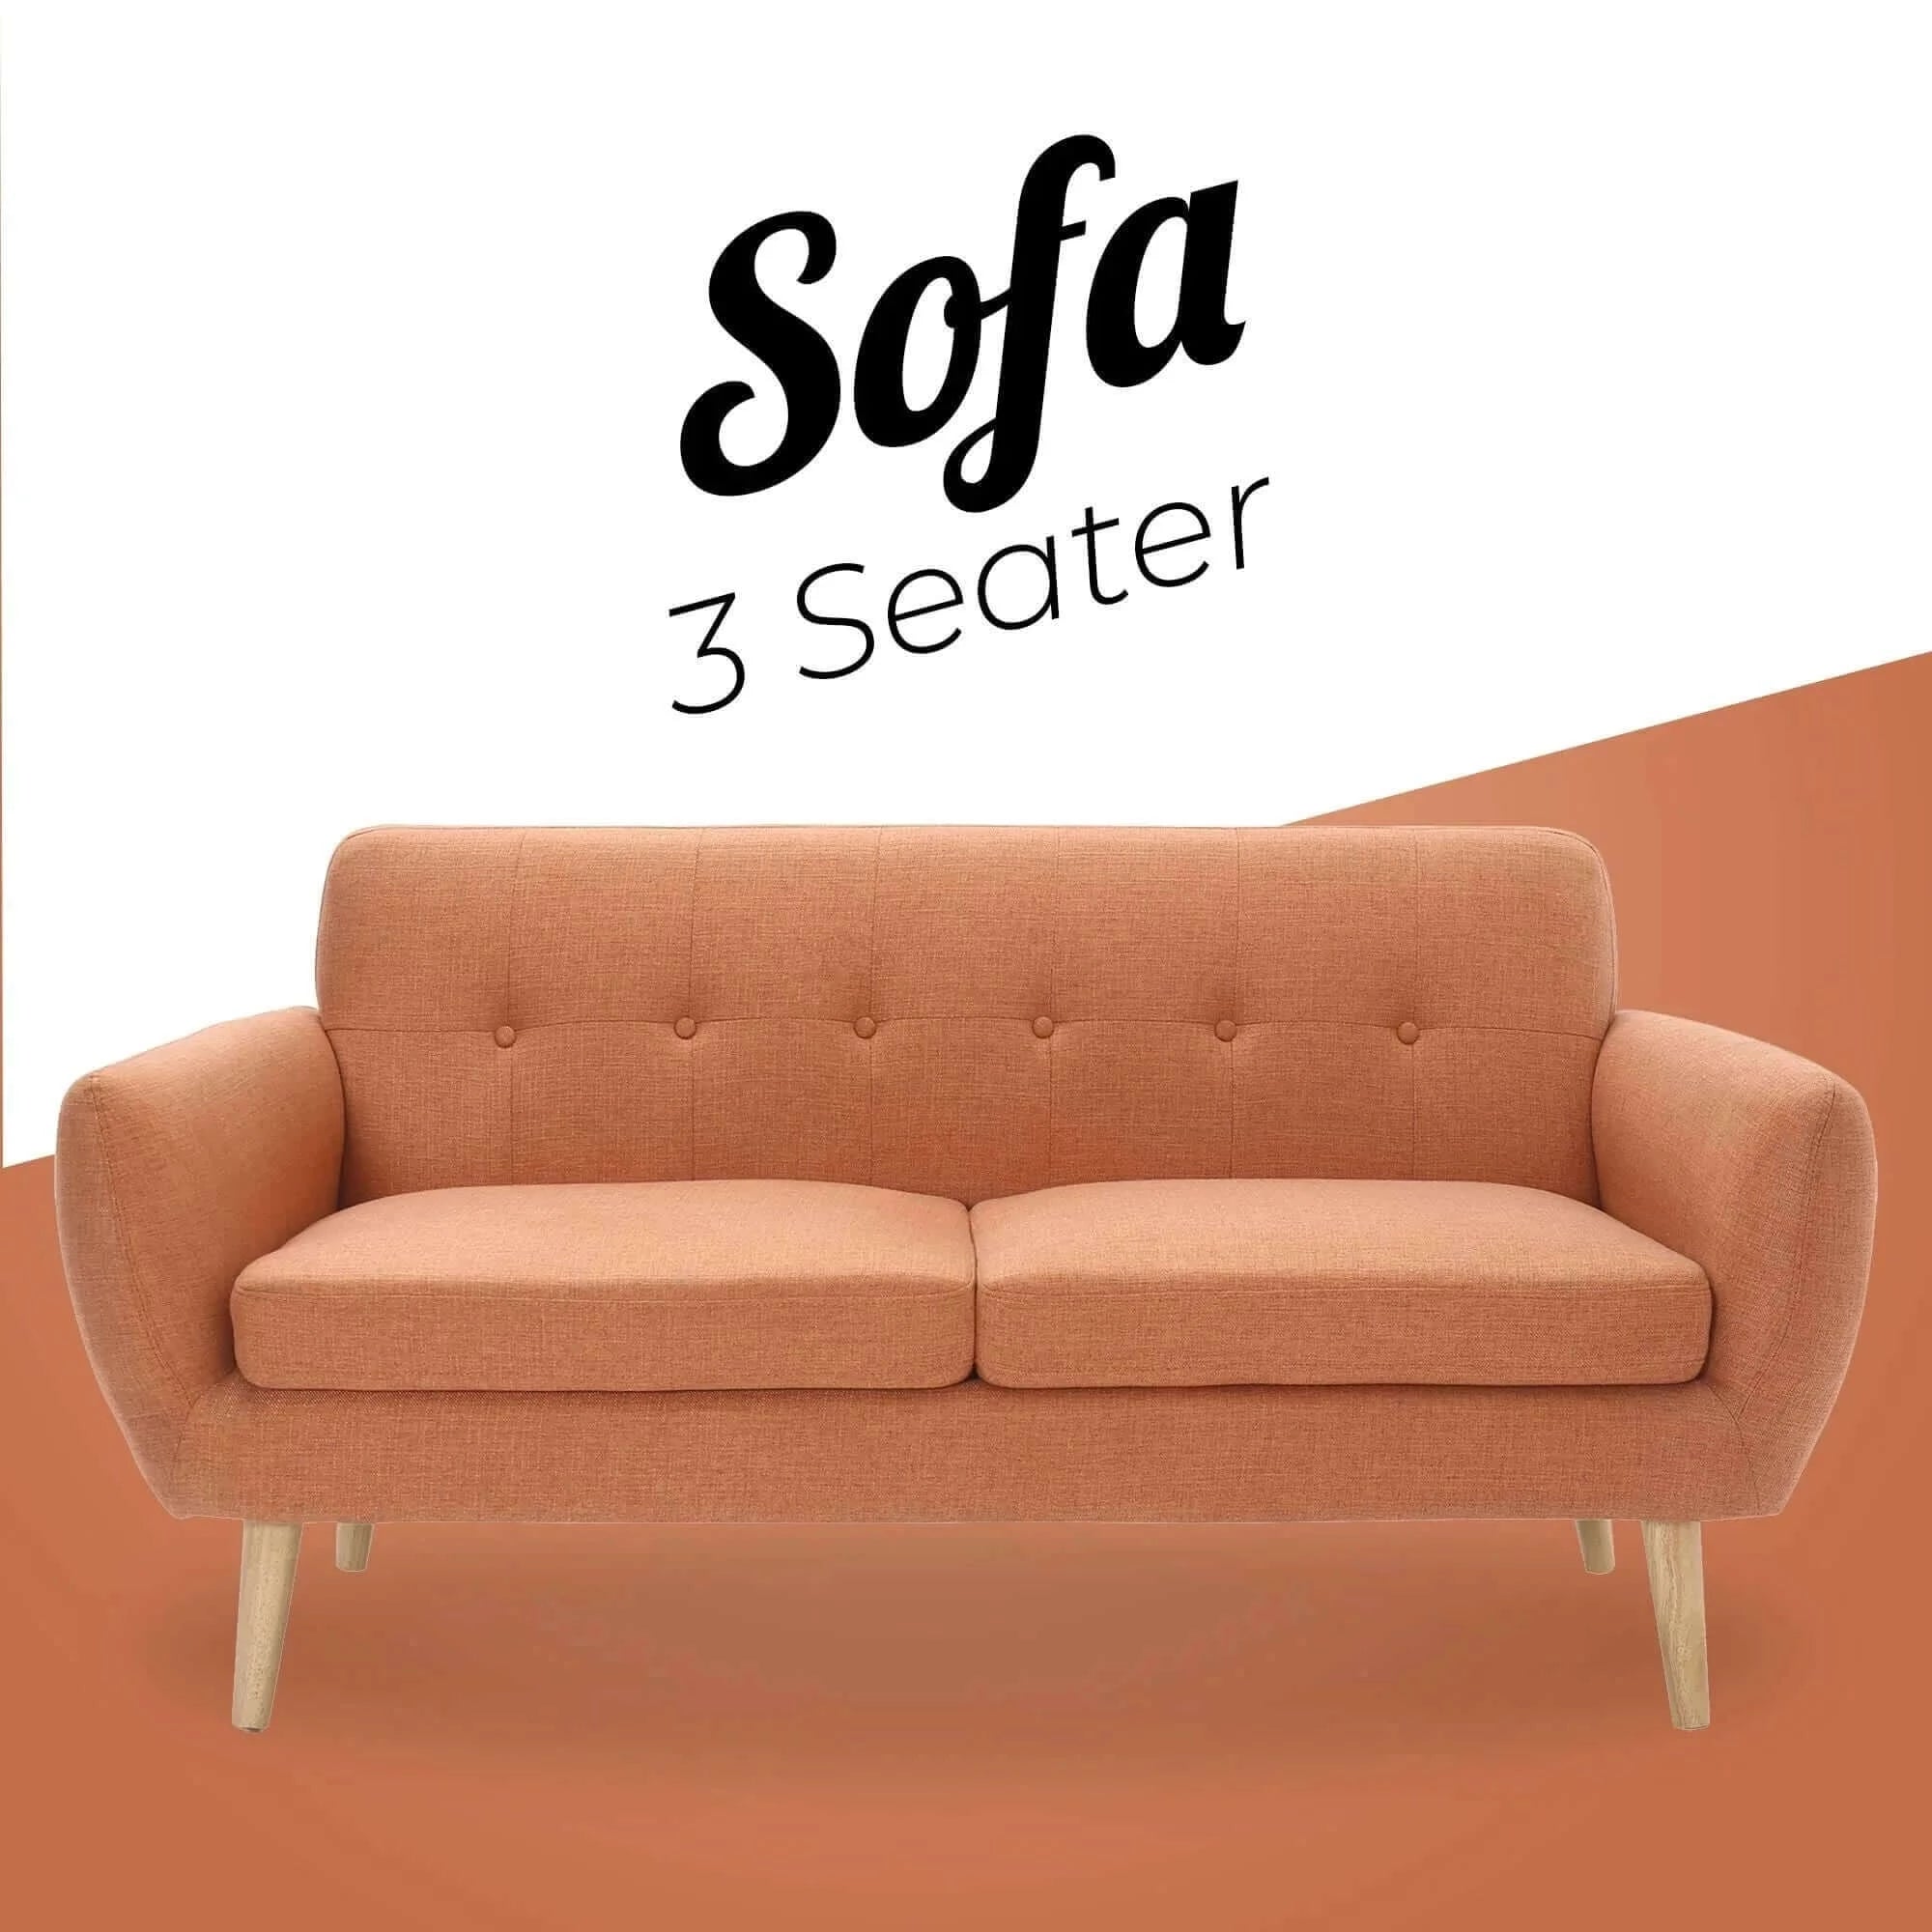 Buy dane 3 + 1 + 1 seater fabric upholstered sofa armchair lounge couch - orange - upinteriors-Upinteriors